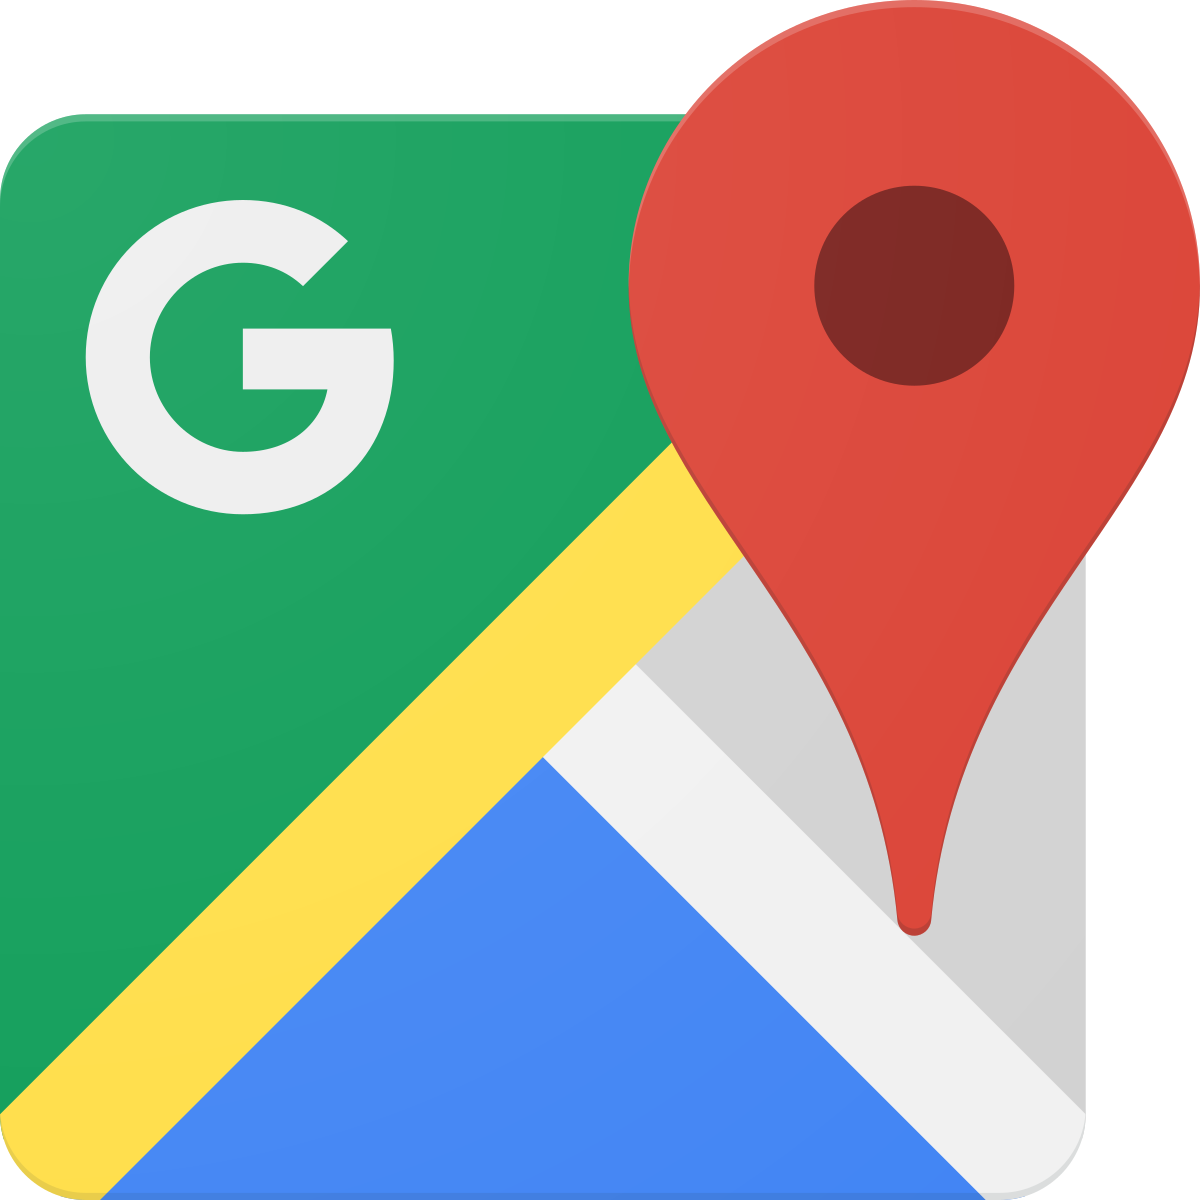 Steaua Dunarii - Google Maps